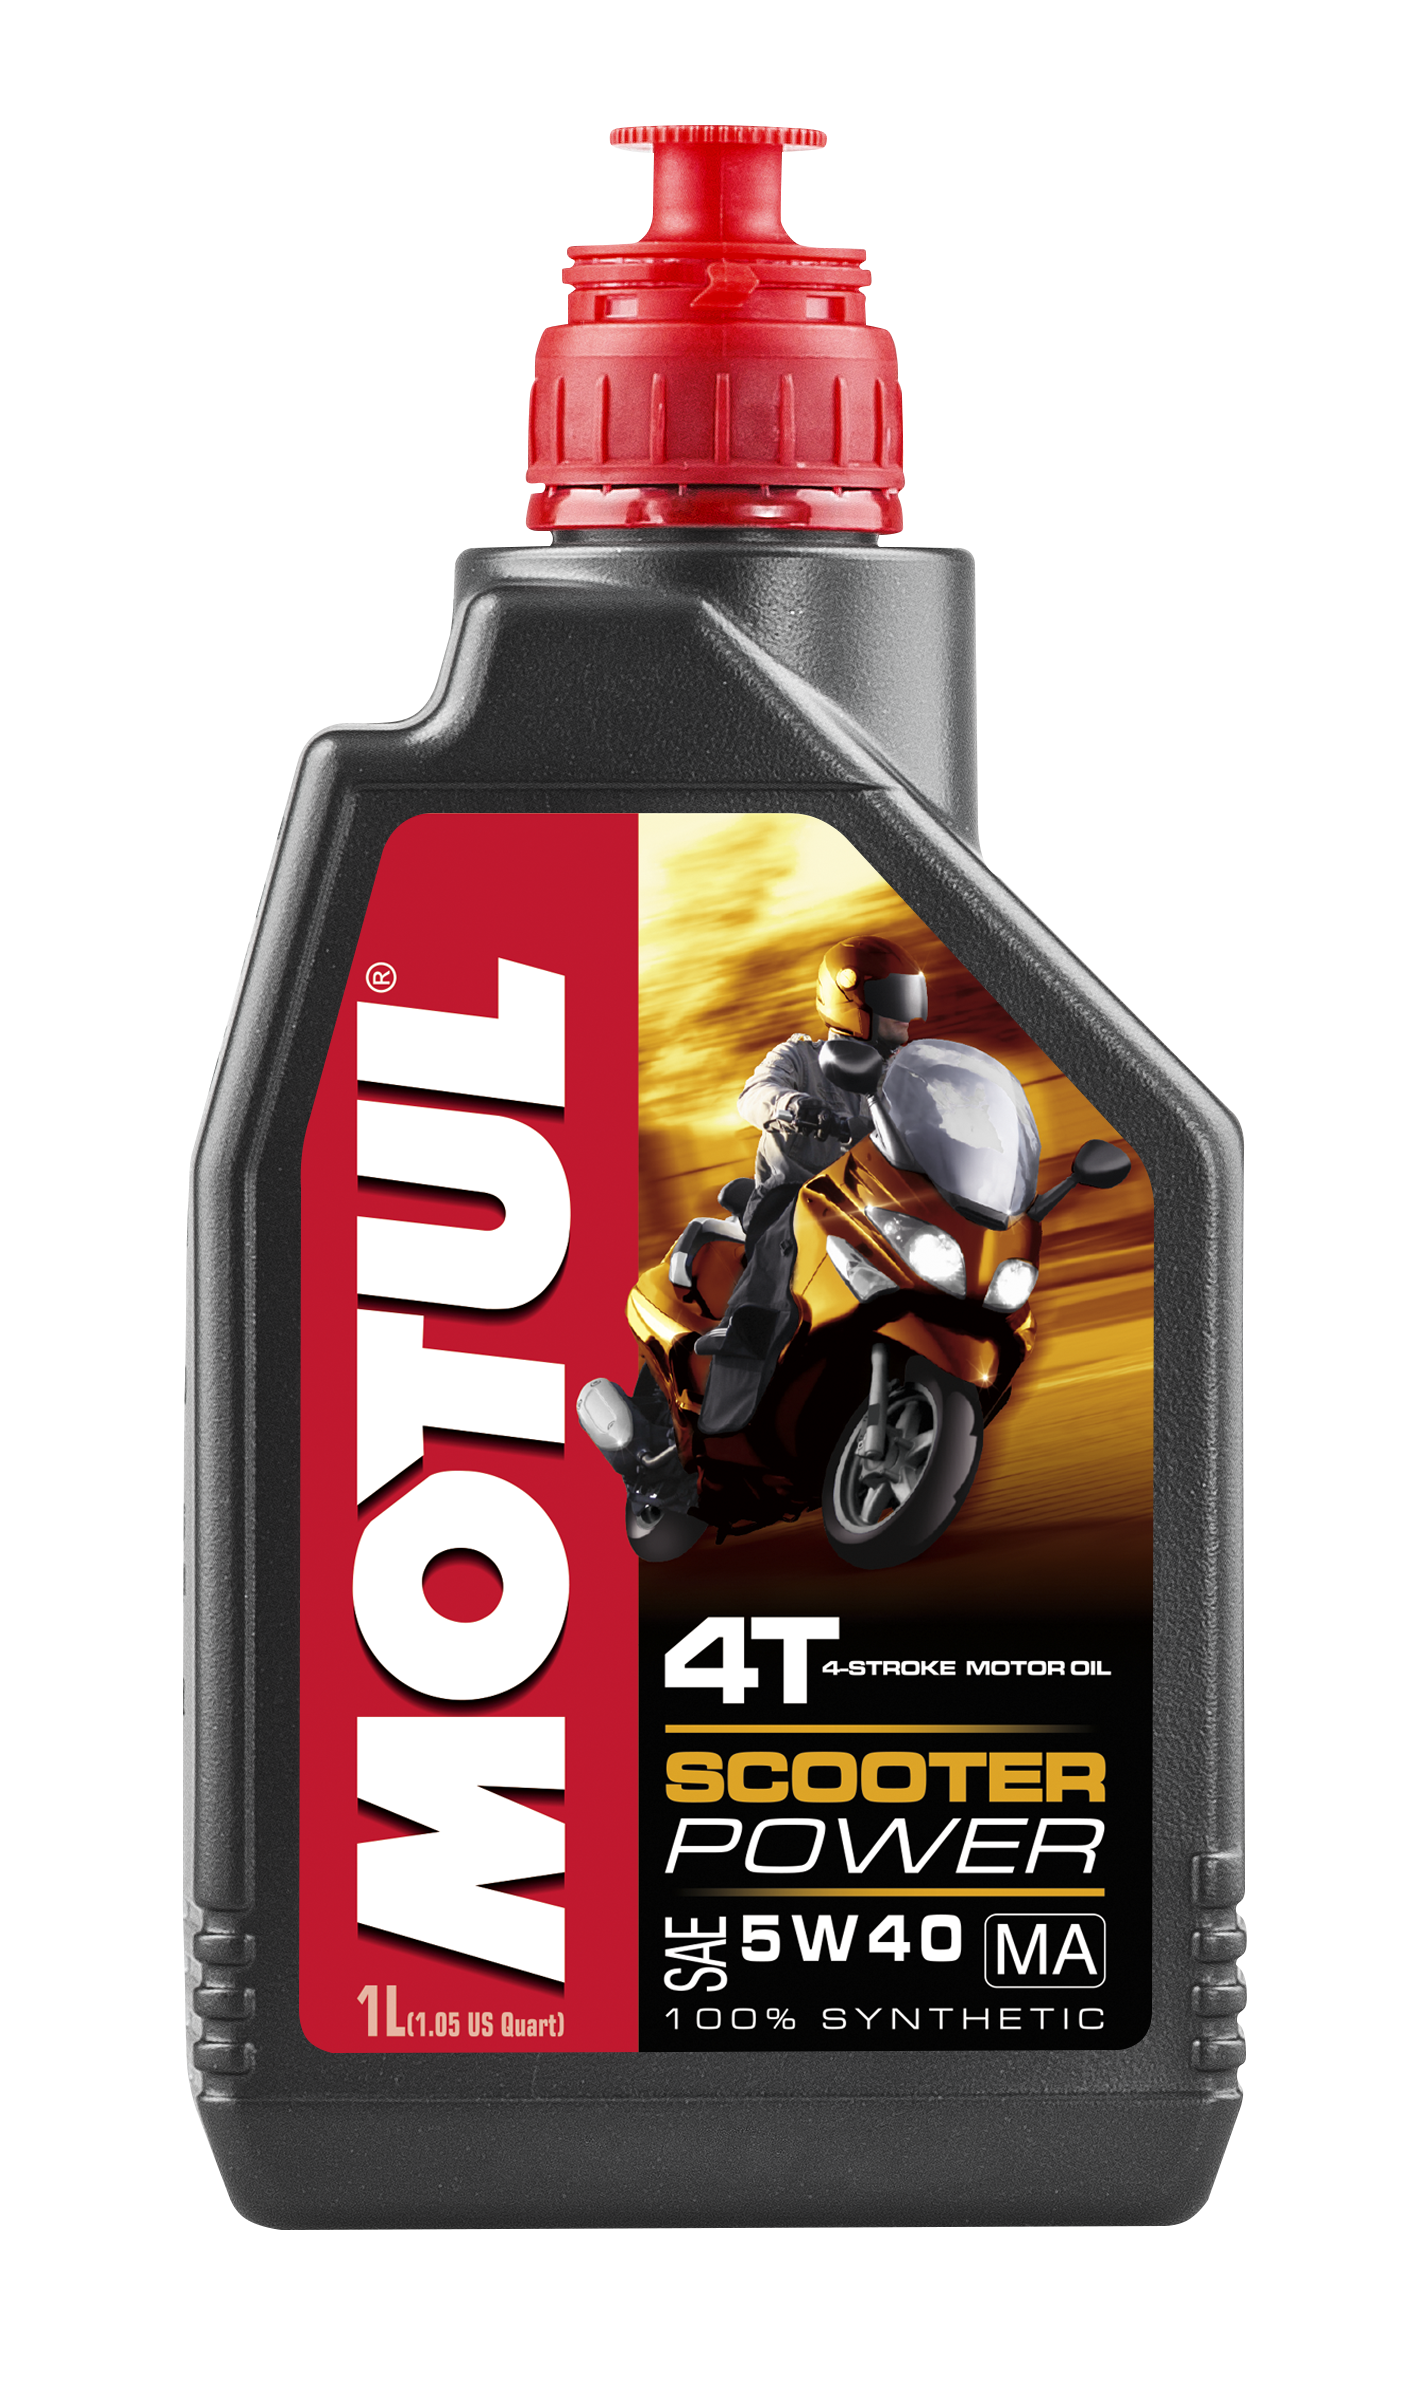 MOTUL Scooter Power 4T SAE 5W-40 MA 